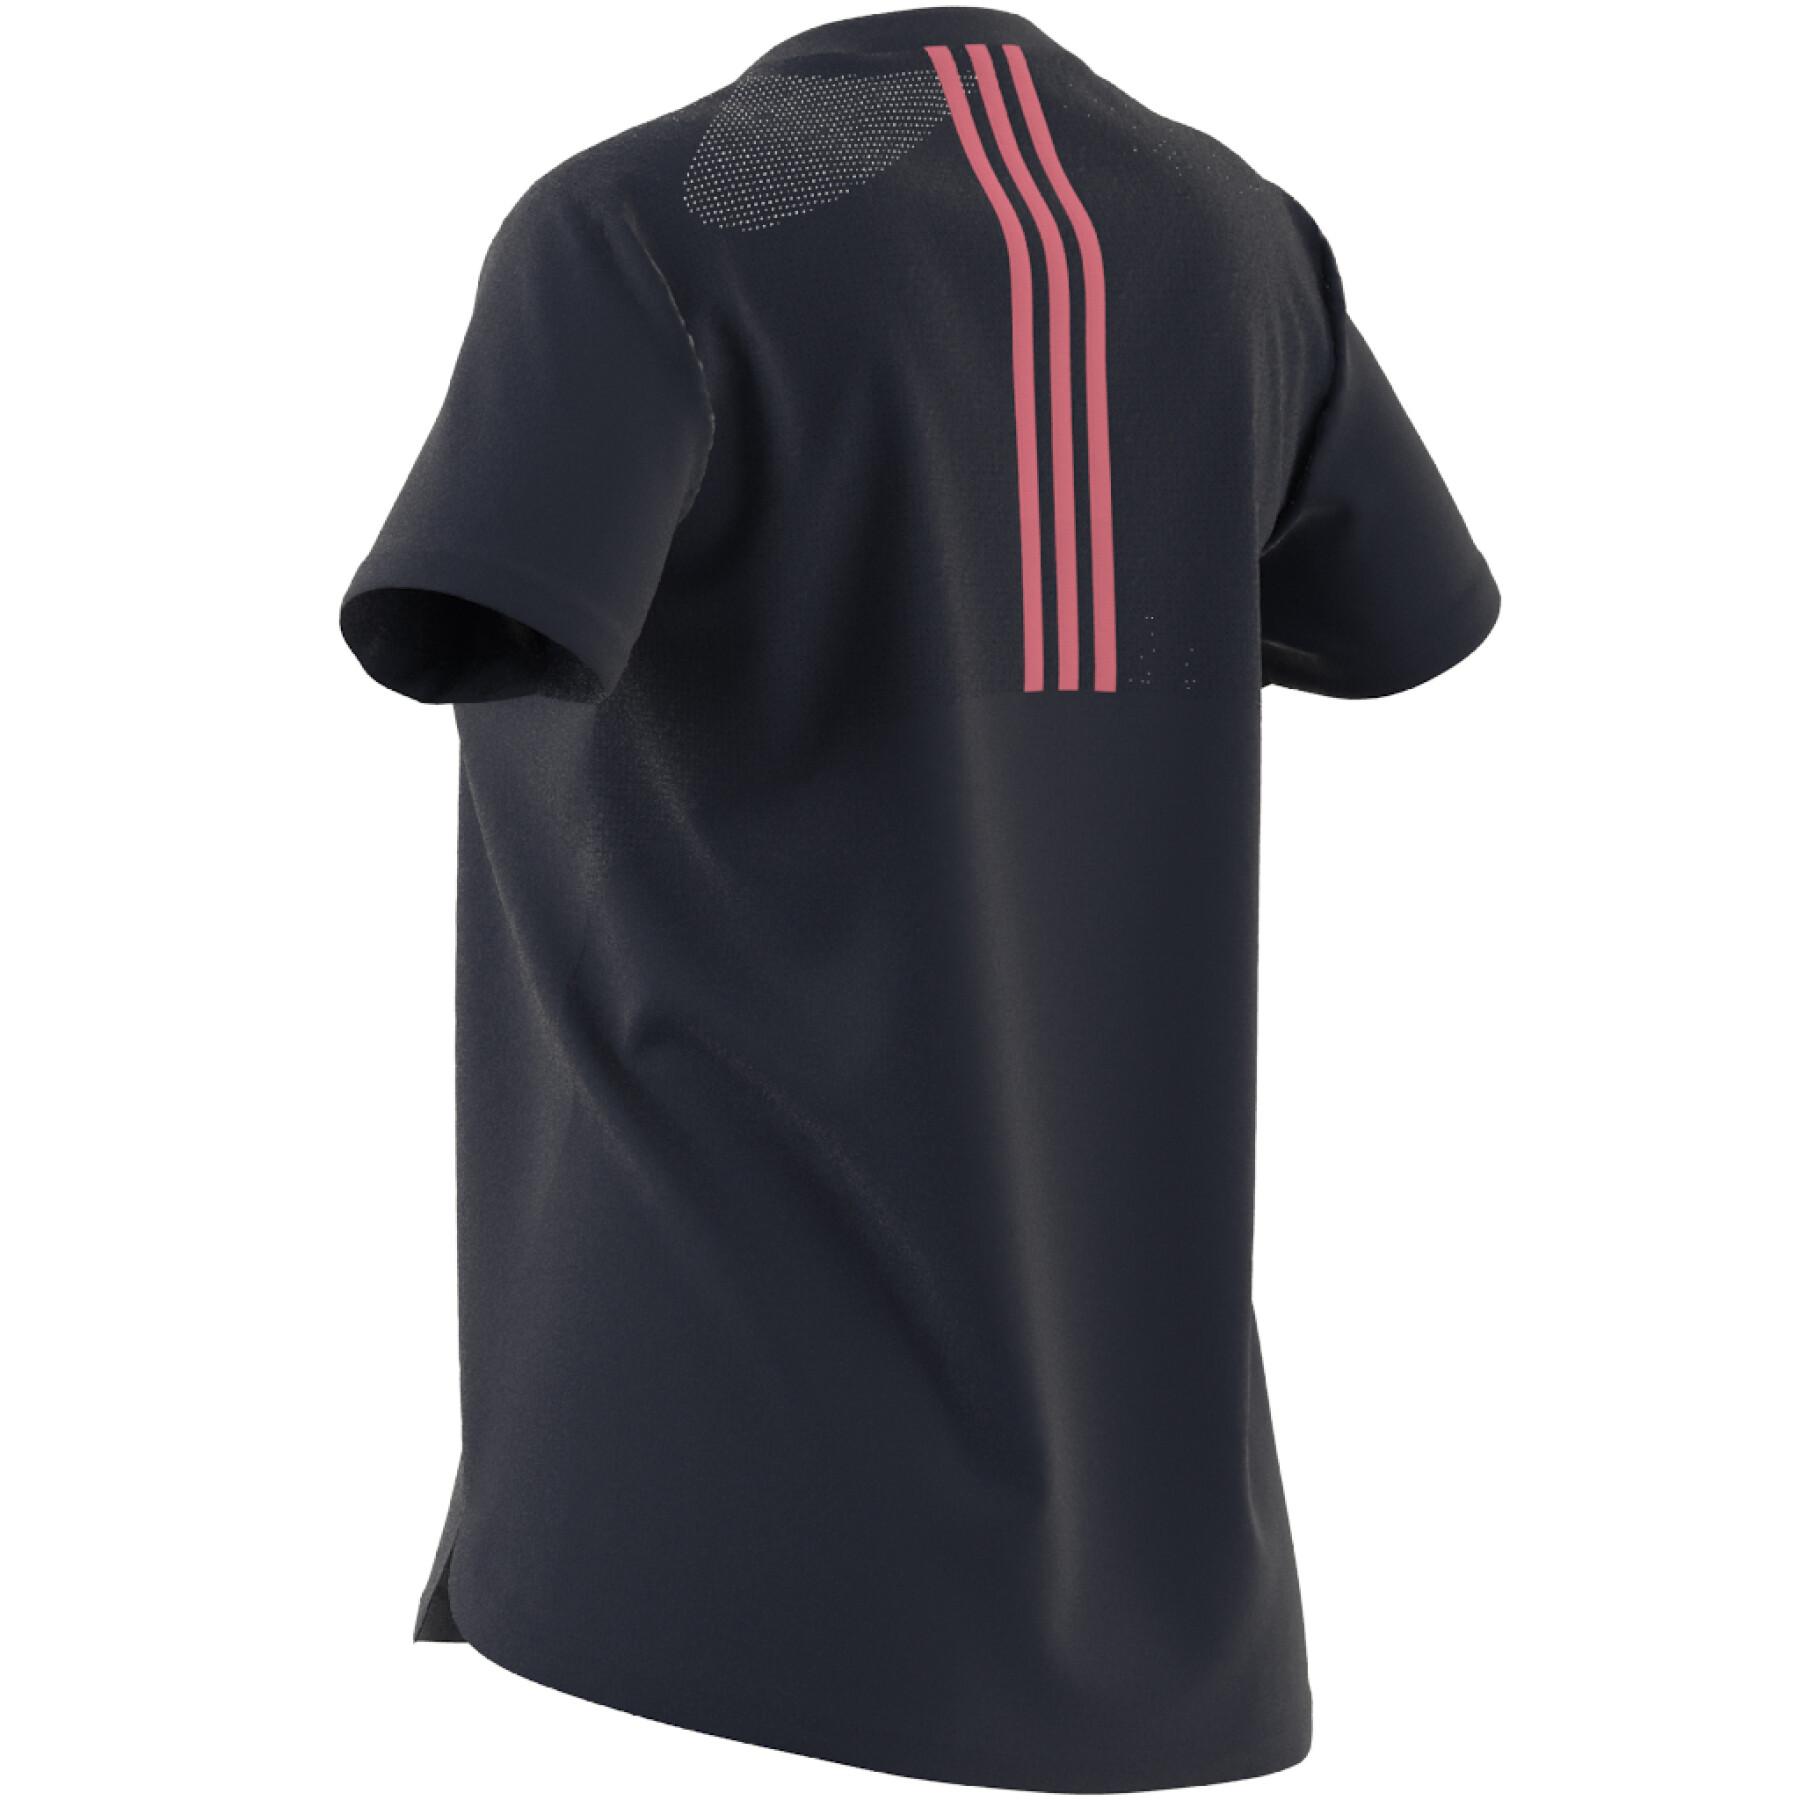 T-Shirt Frau adidas AEROREADY Designed 2 Move 3-Stripes Sport